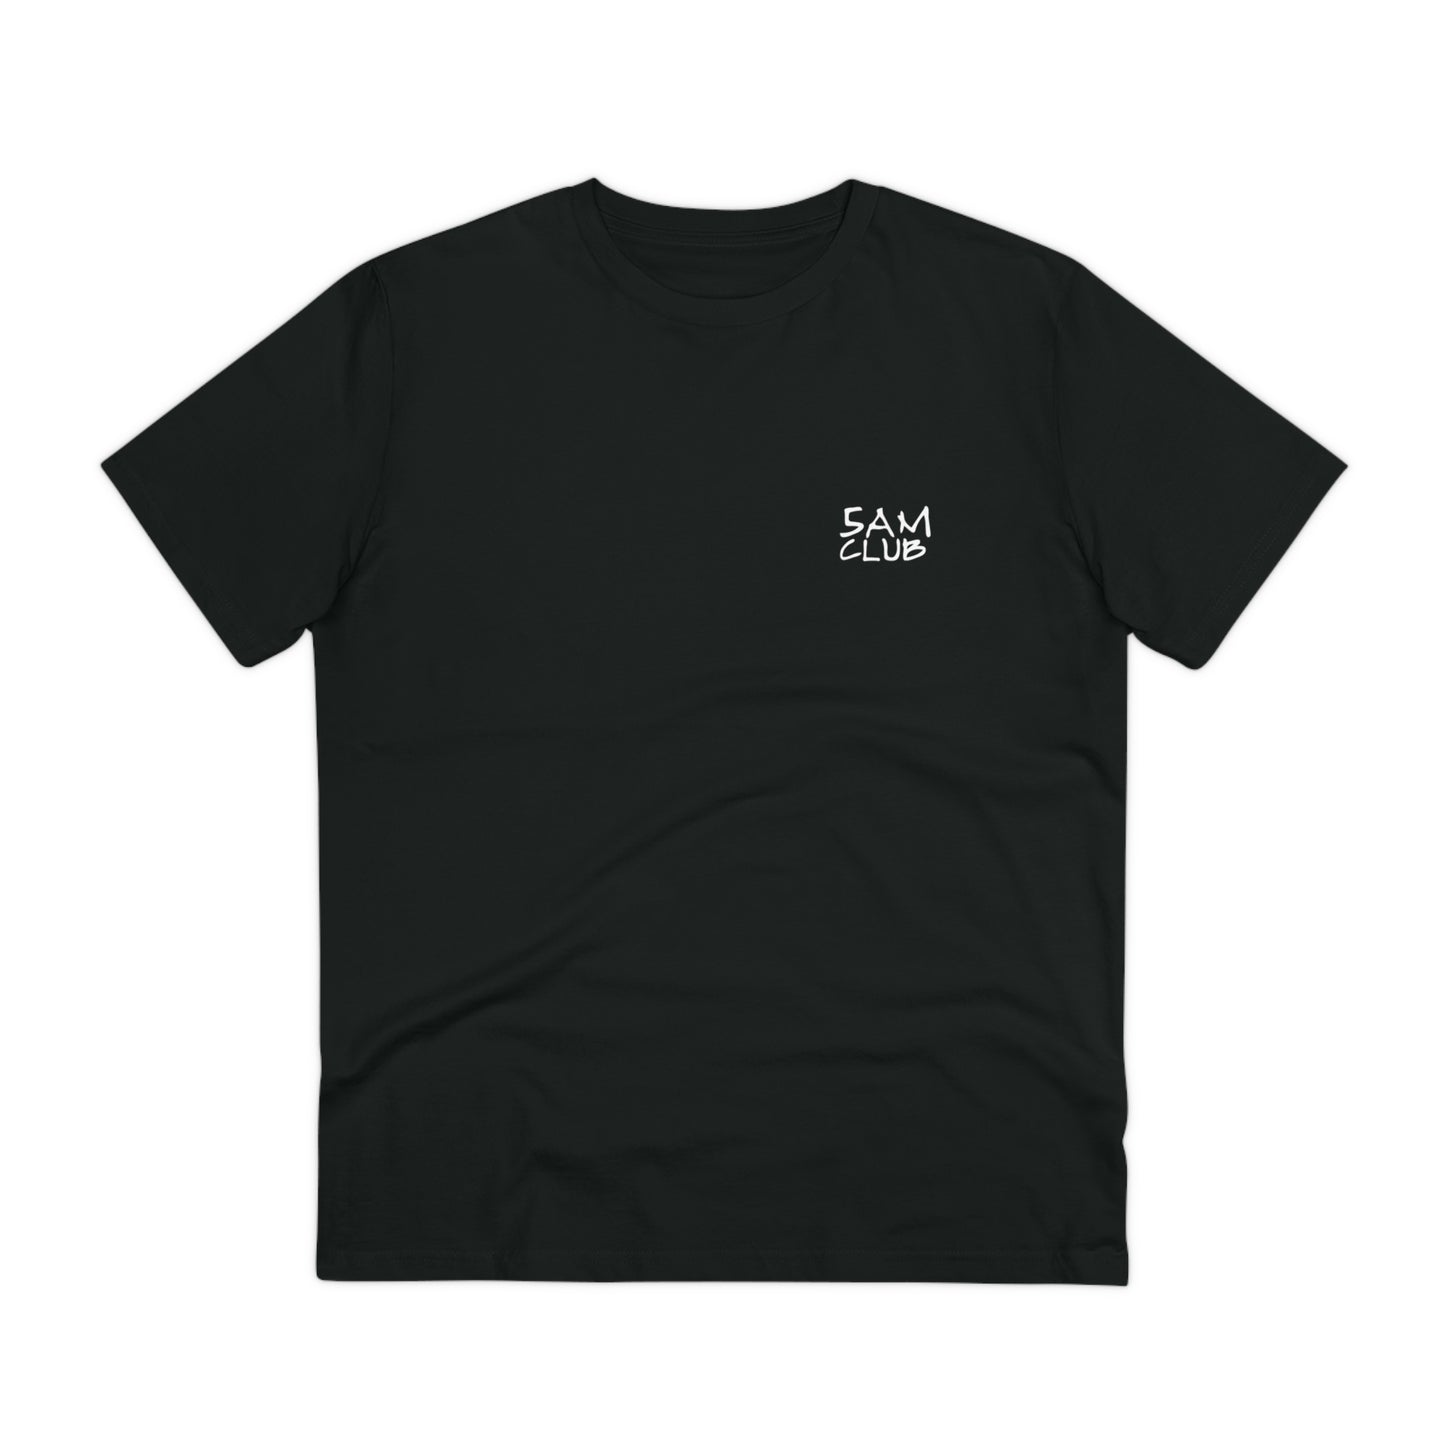 5AM CLUB - Organic T-shirt Unisex